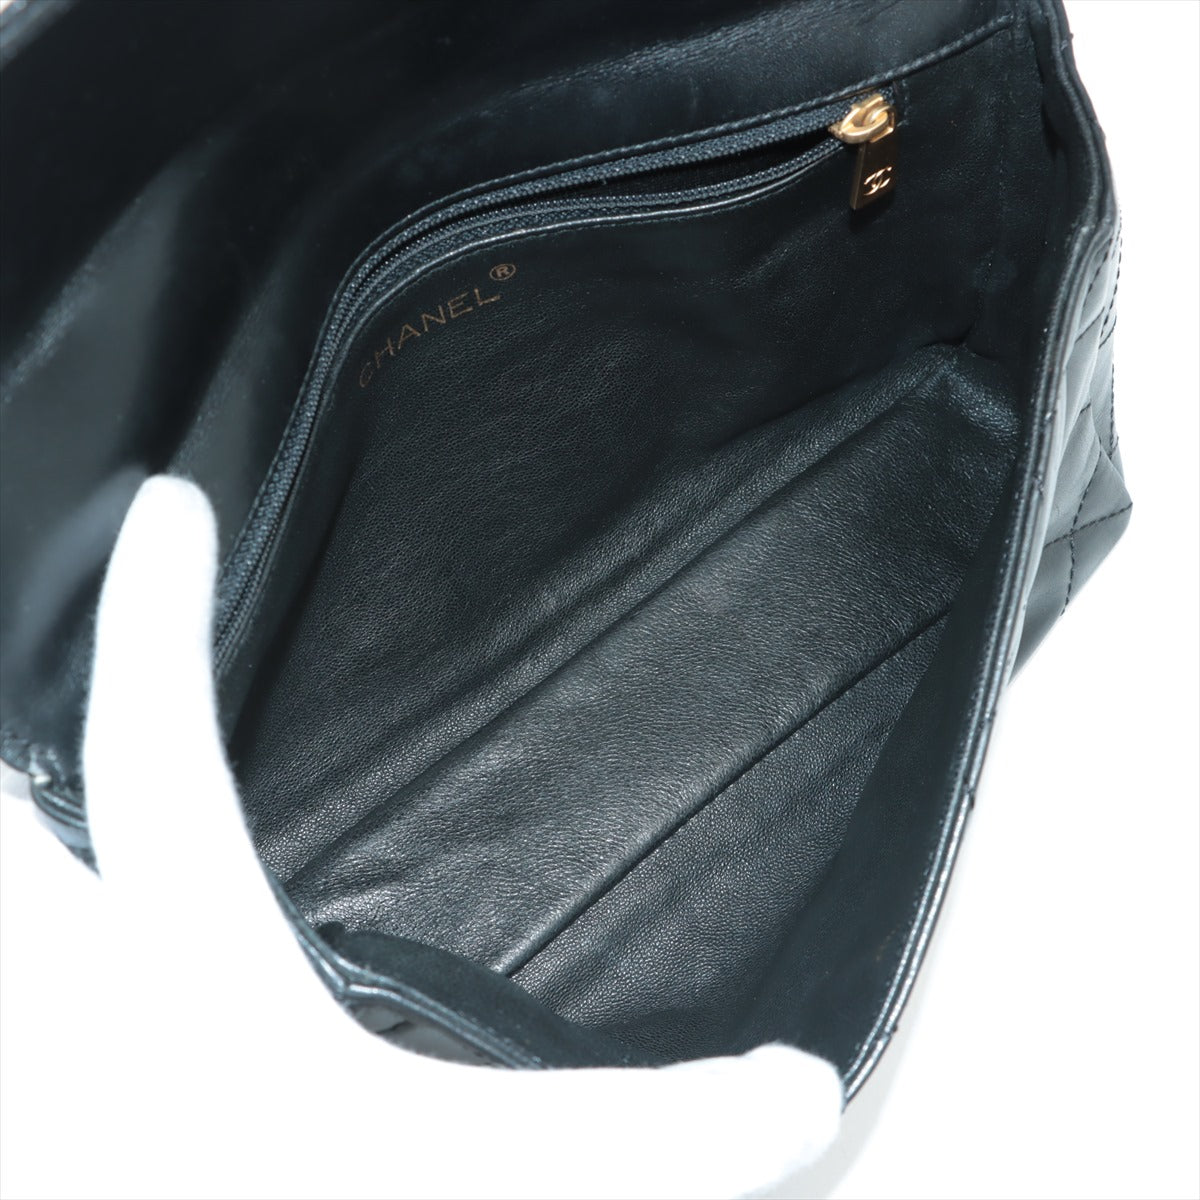 Chanel Matelasse Lambskin Chain shoulder bag Black Plastic fittings 6XXXXXX